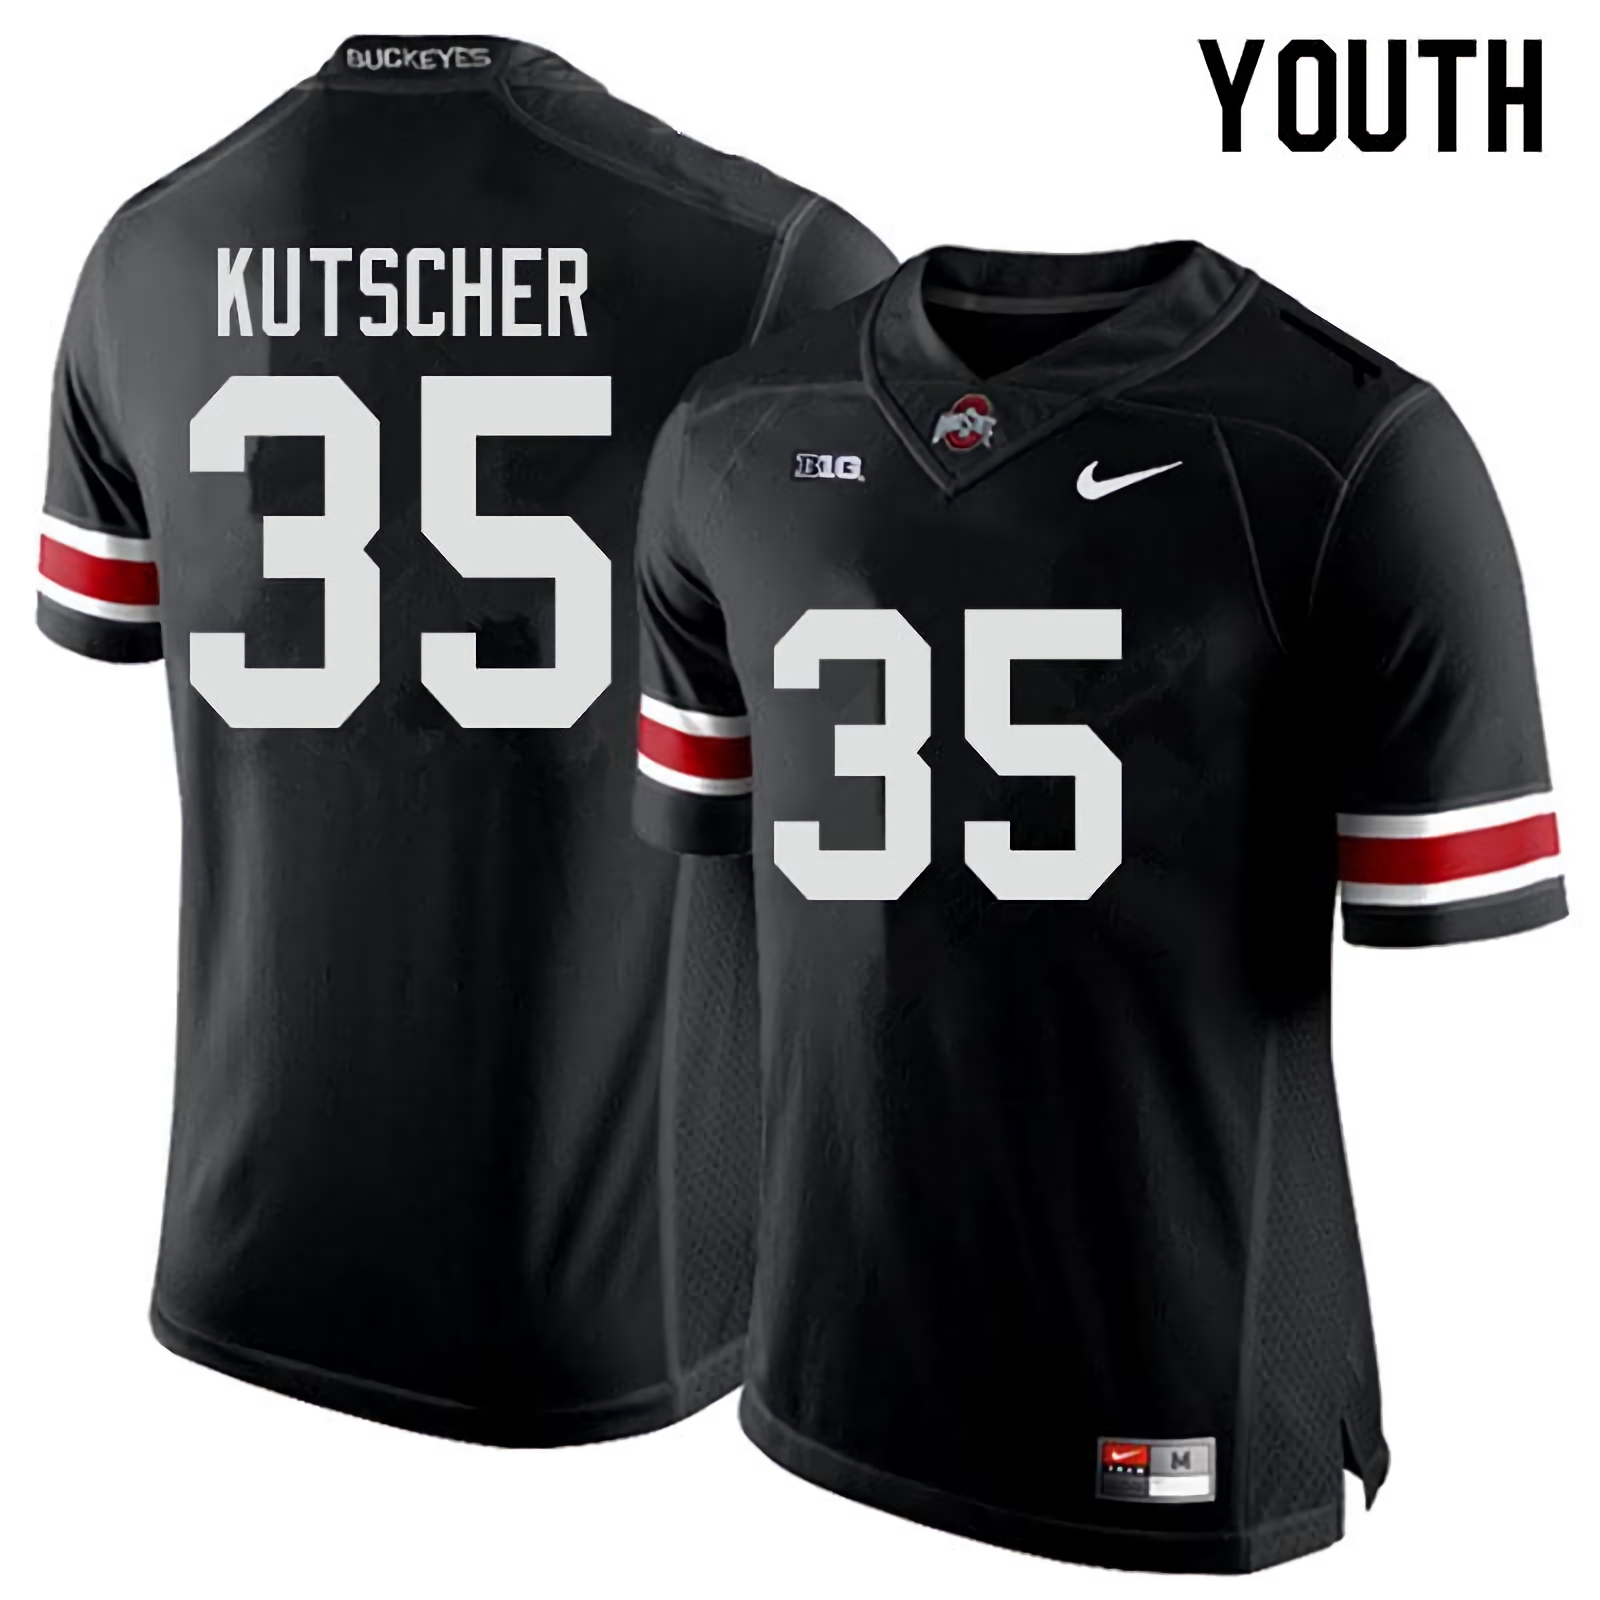 Austin Kutscher Ohio State Buckeyes Youth NCAA #35 Nike Black College Stitched Football Jersey QHM1256JT